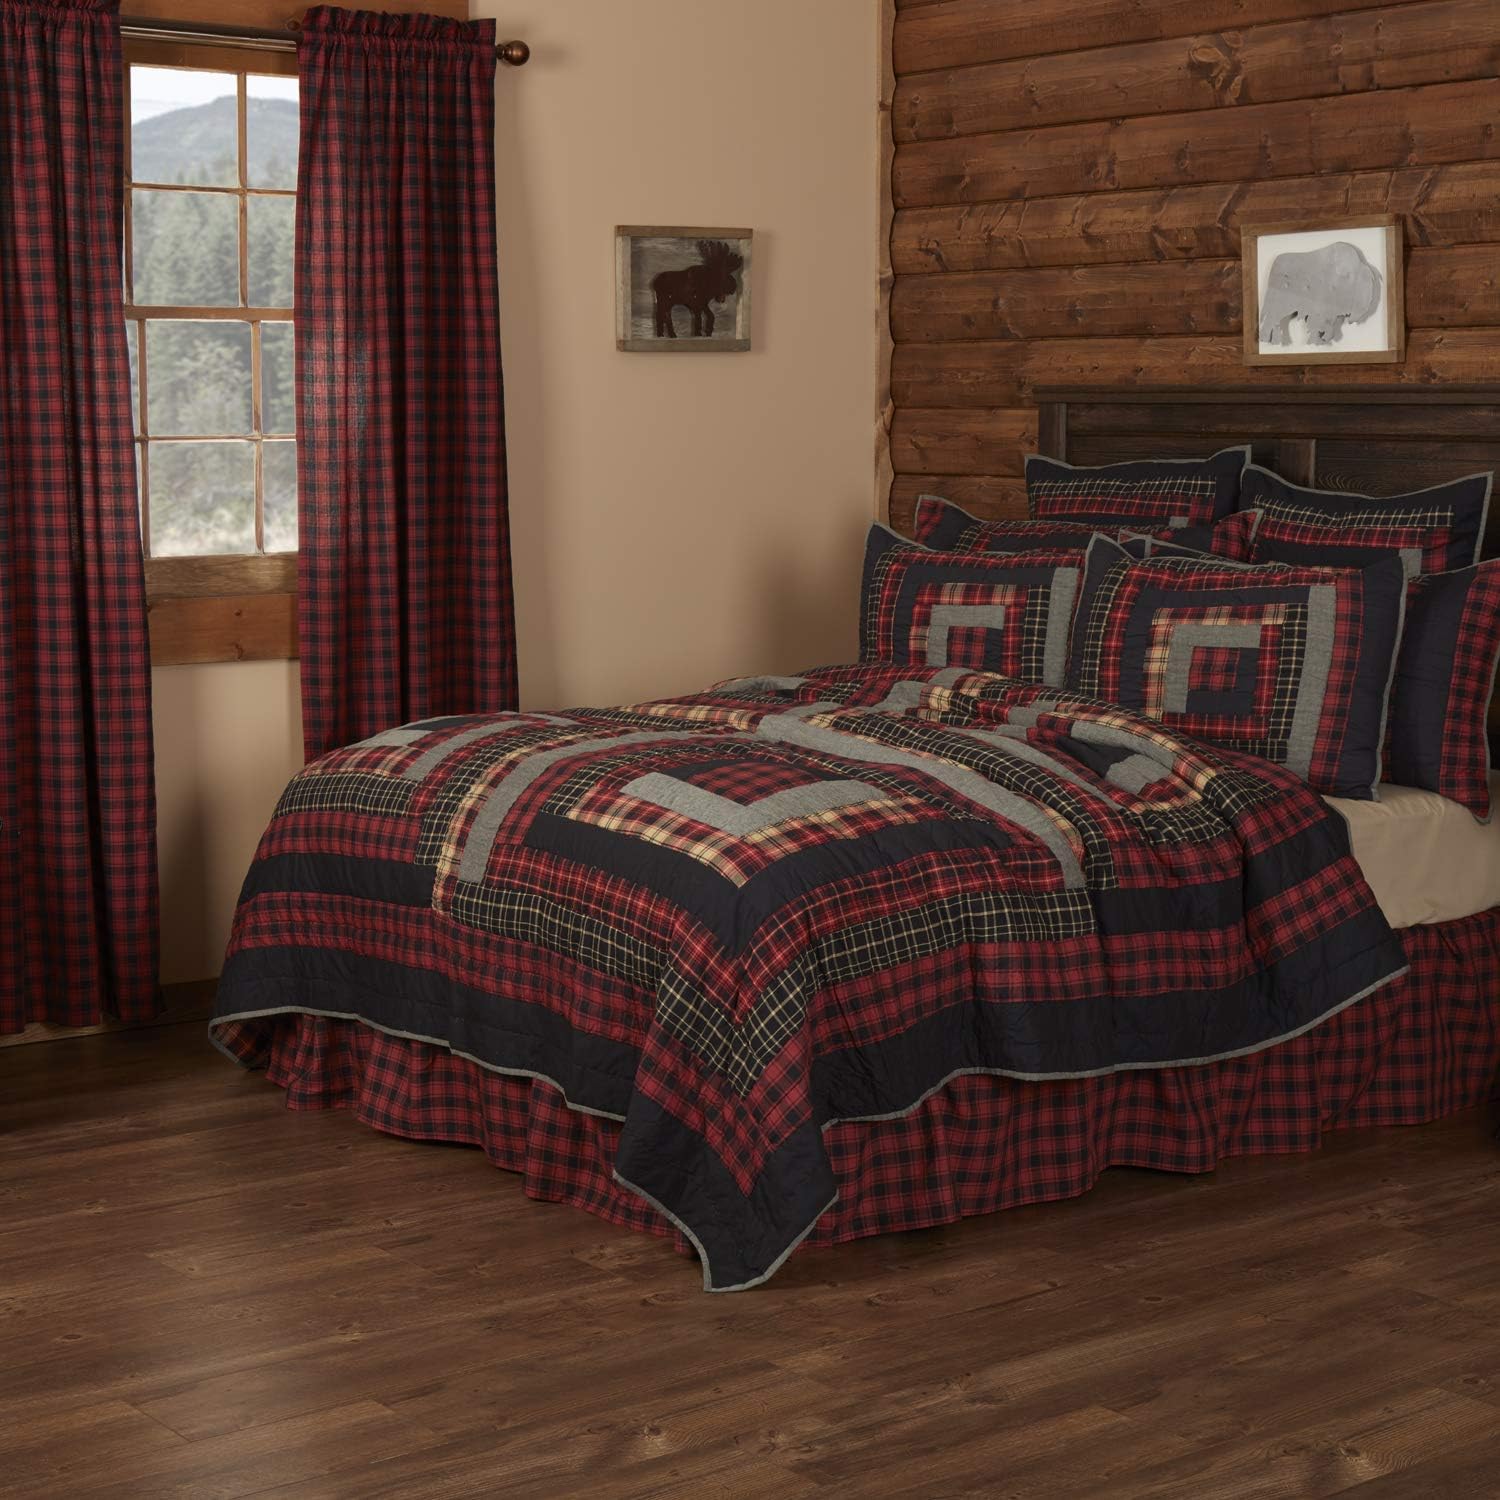 VHC Brands Millsboro Fabric Euro Sham 26x26 Country Rustic Bedding Accessory Tan 